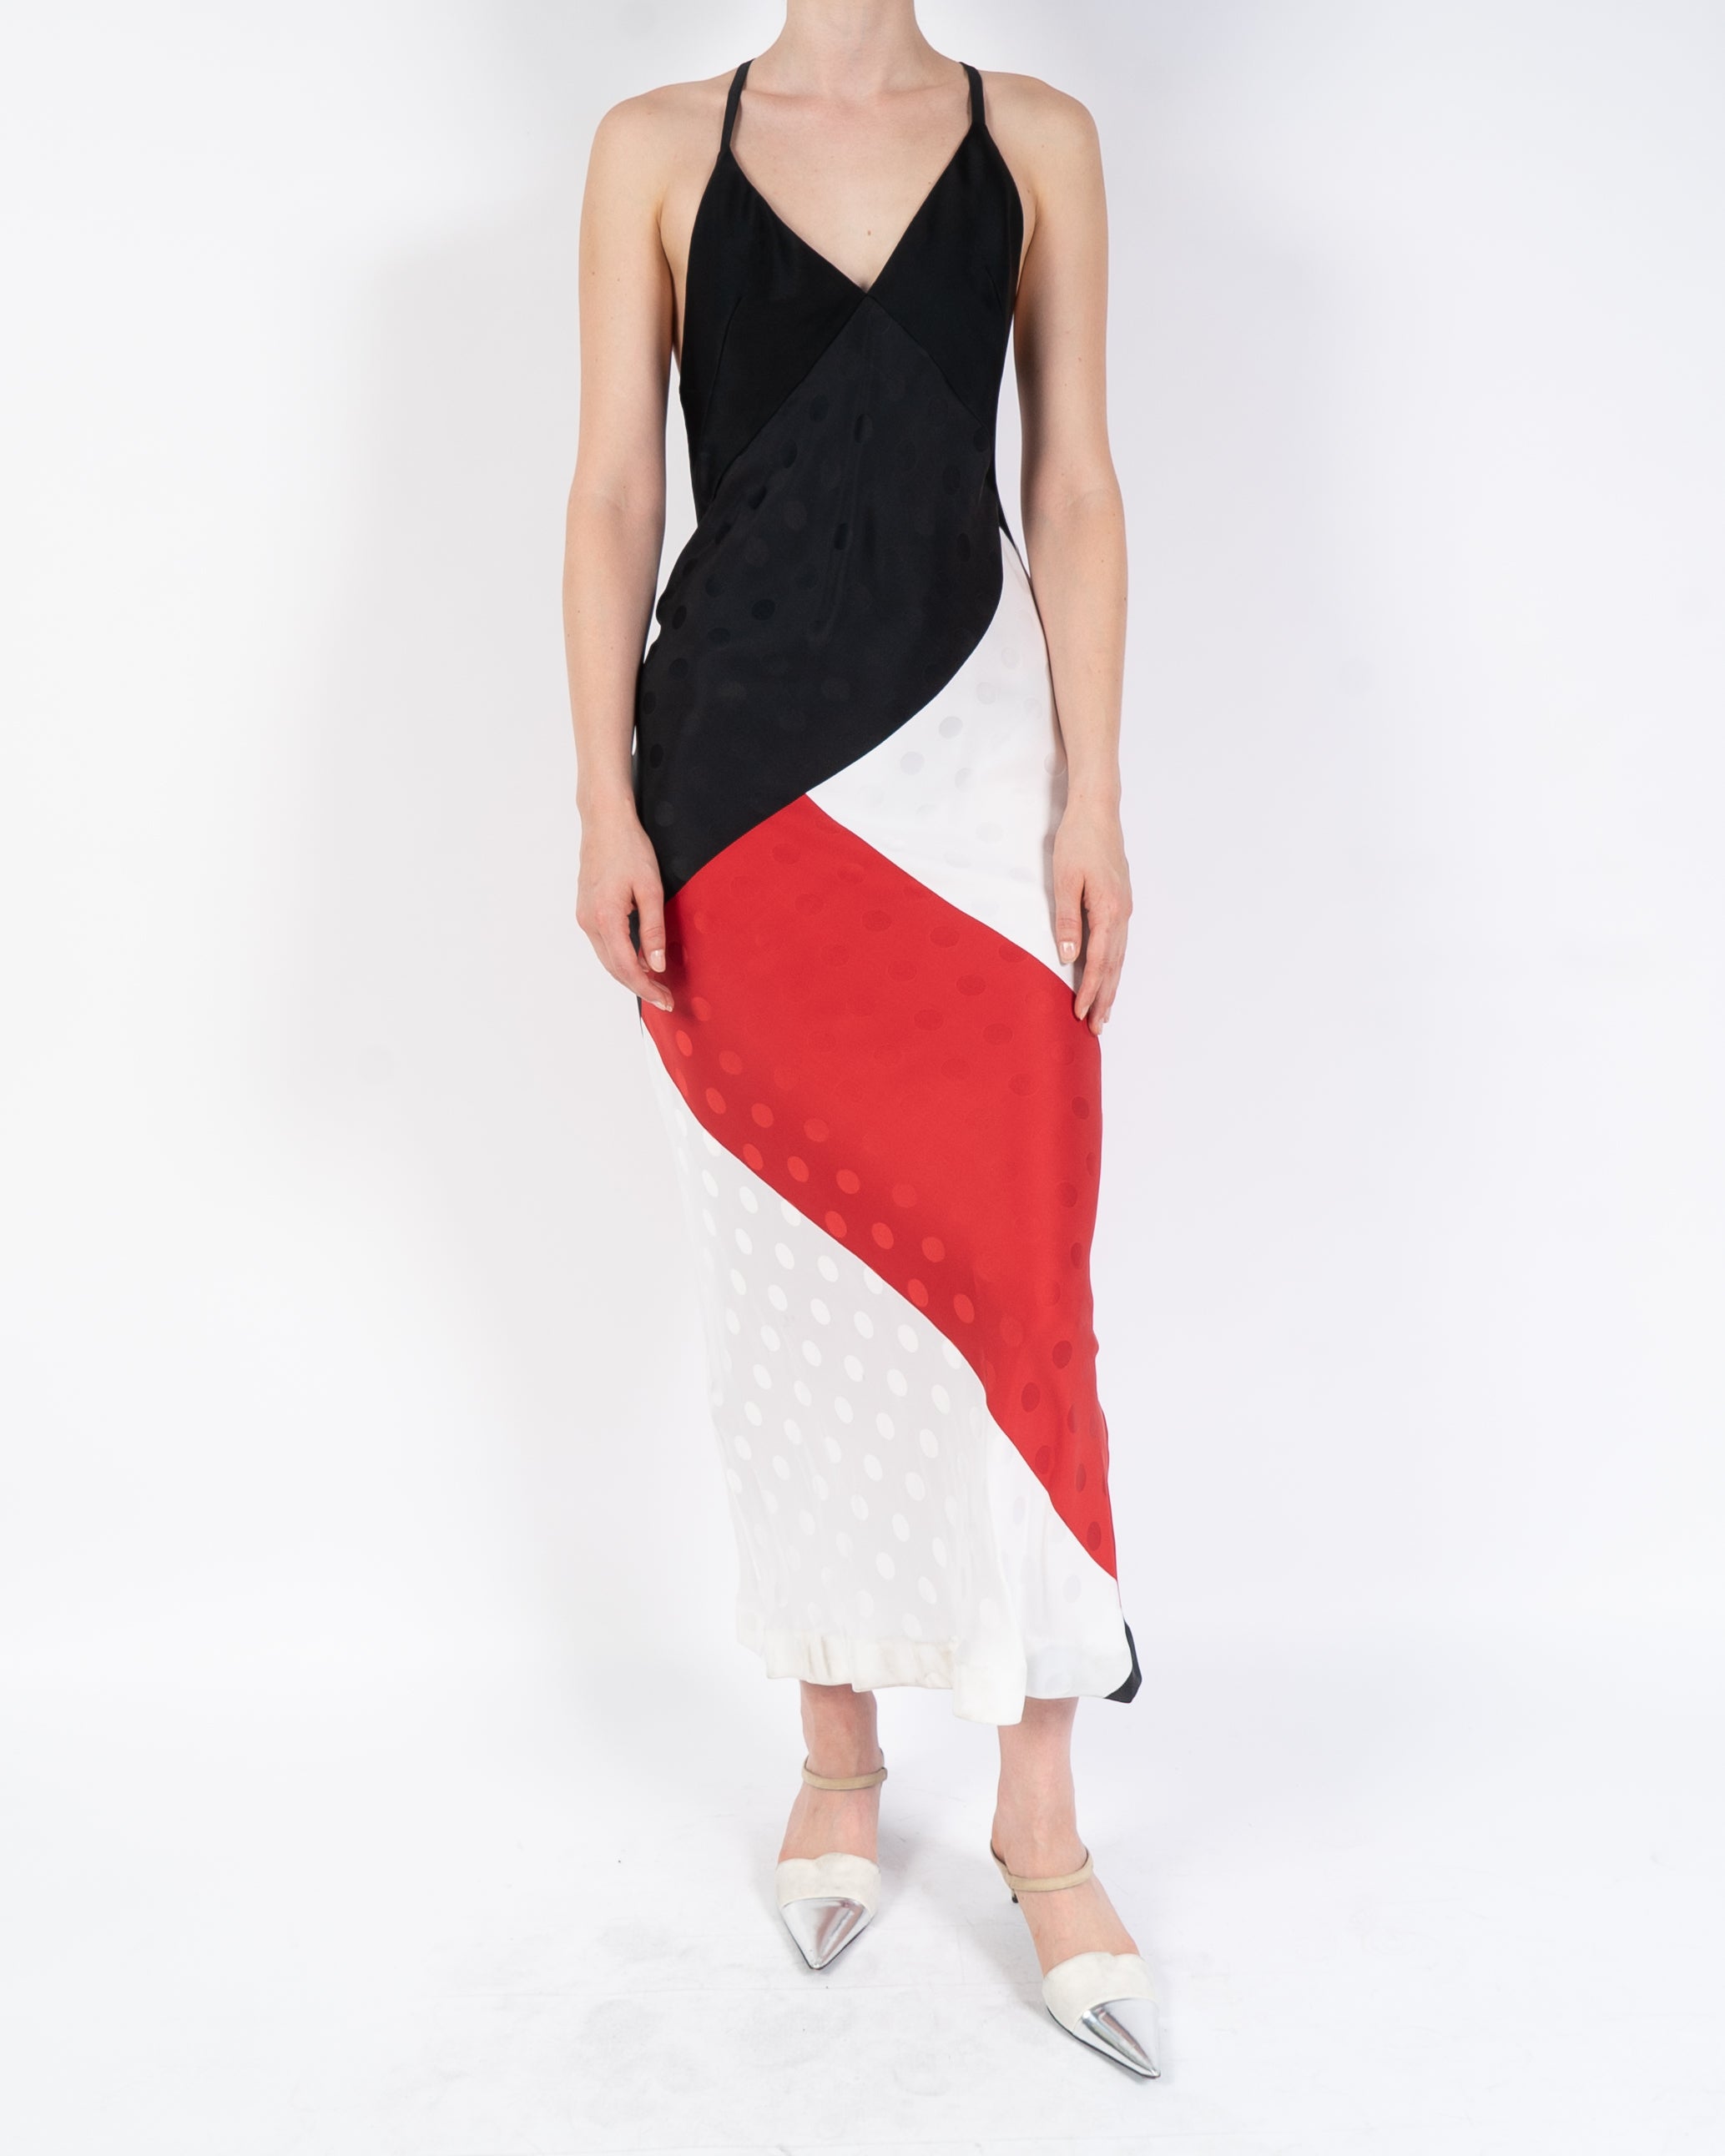 FW19 Multicolor Polkadot Silk Dress Sample